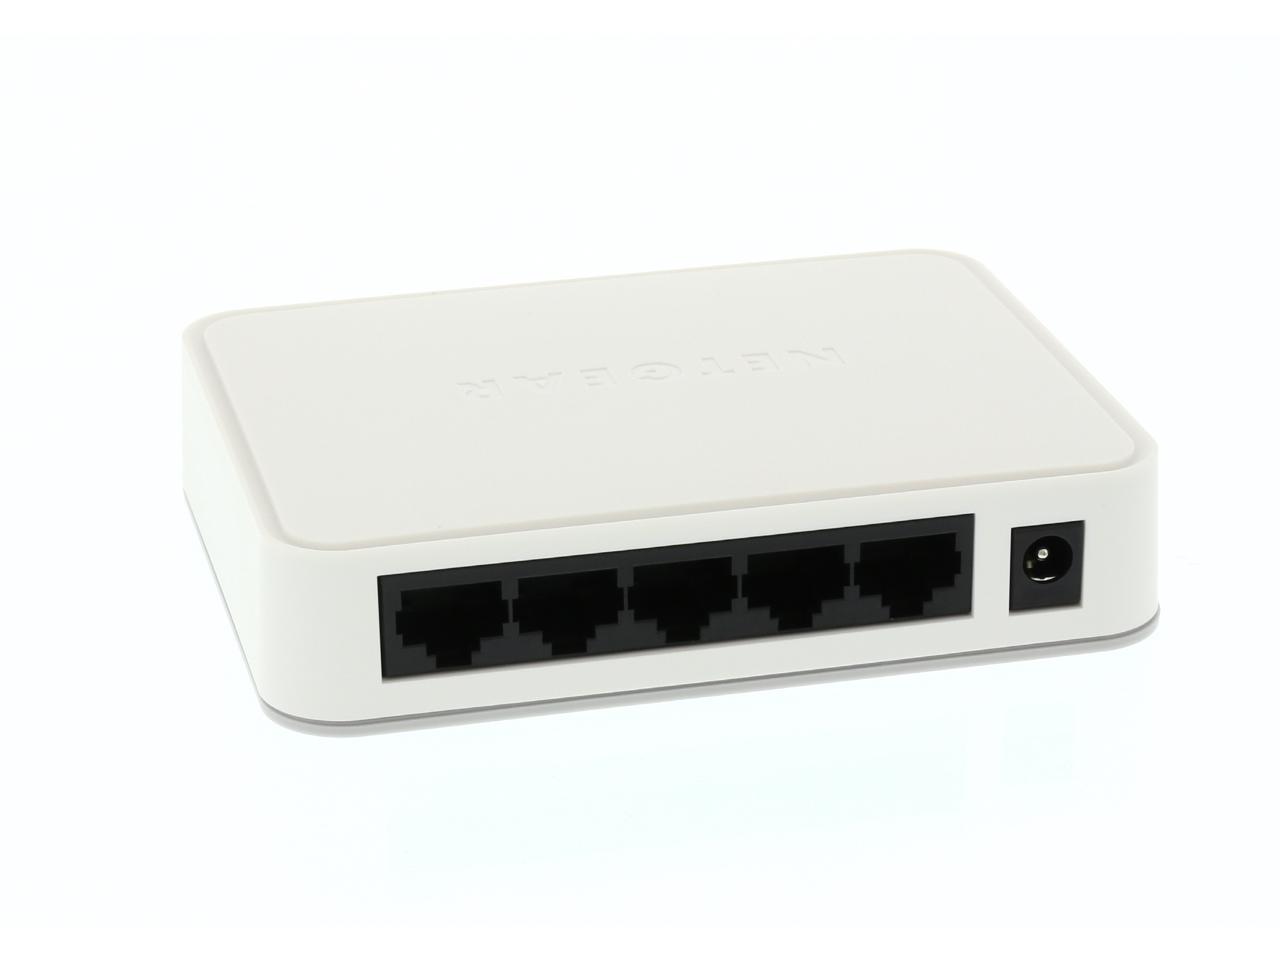 A NETGEAR GS205-100UKS 5 Port Gigabit Ethernet Desktop Switch 1 